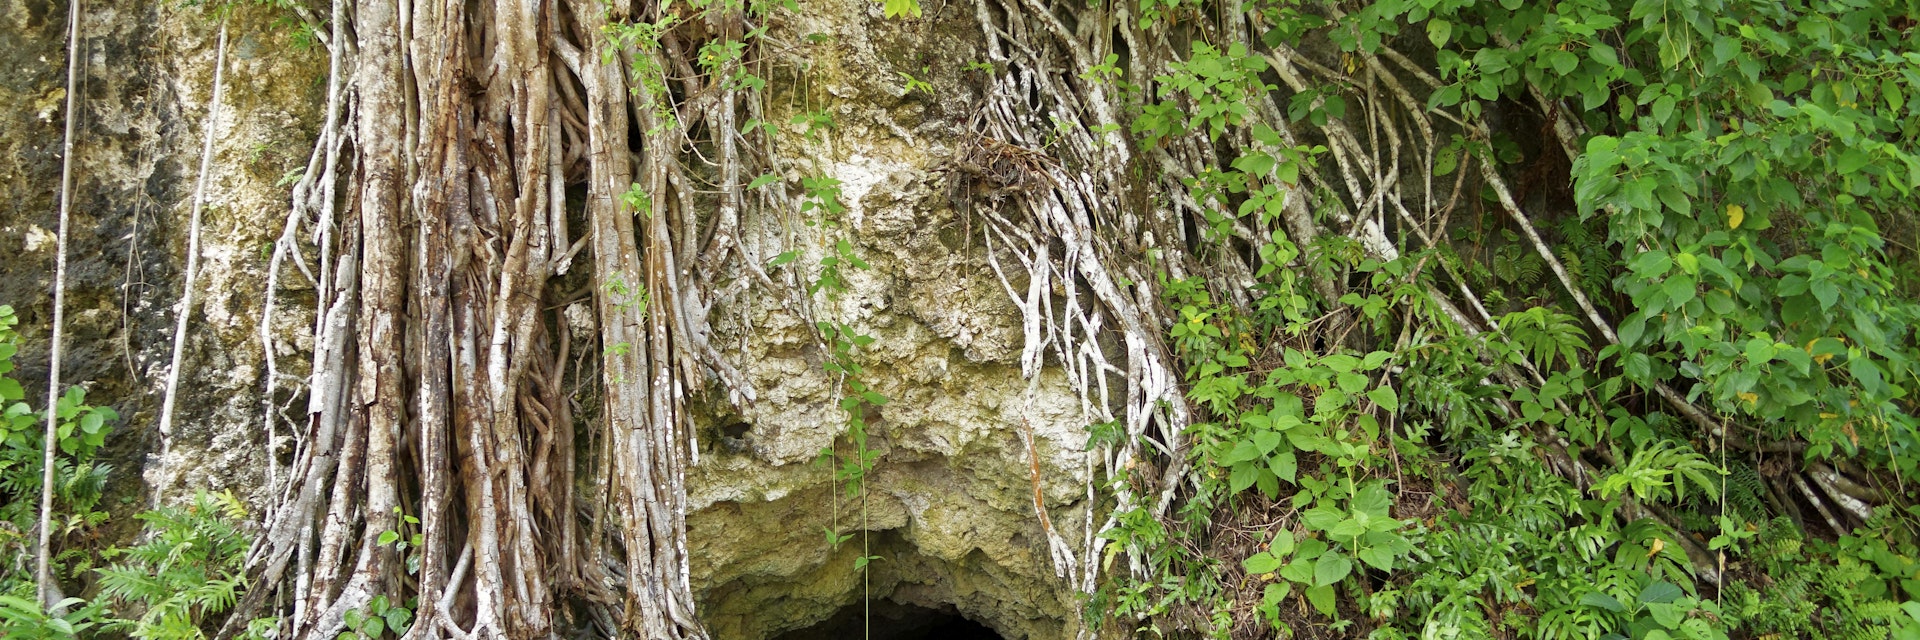 Thousand Man Cave, Peleliu Island, Palau